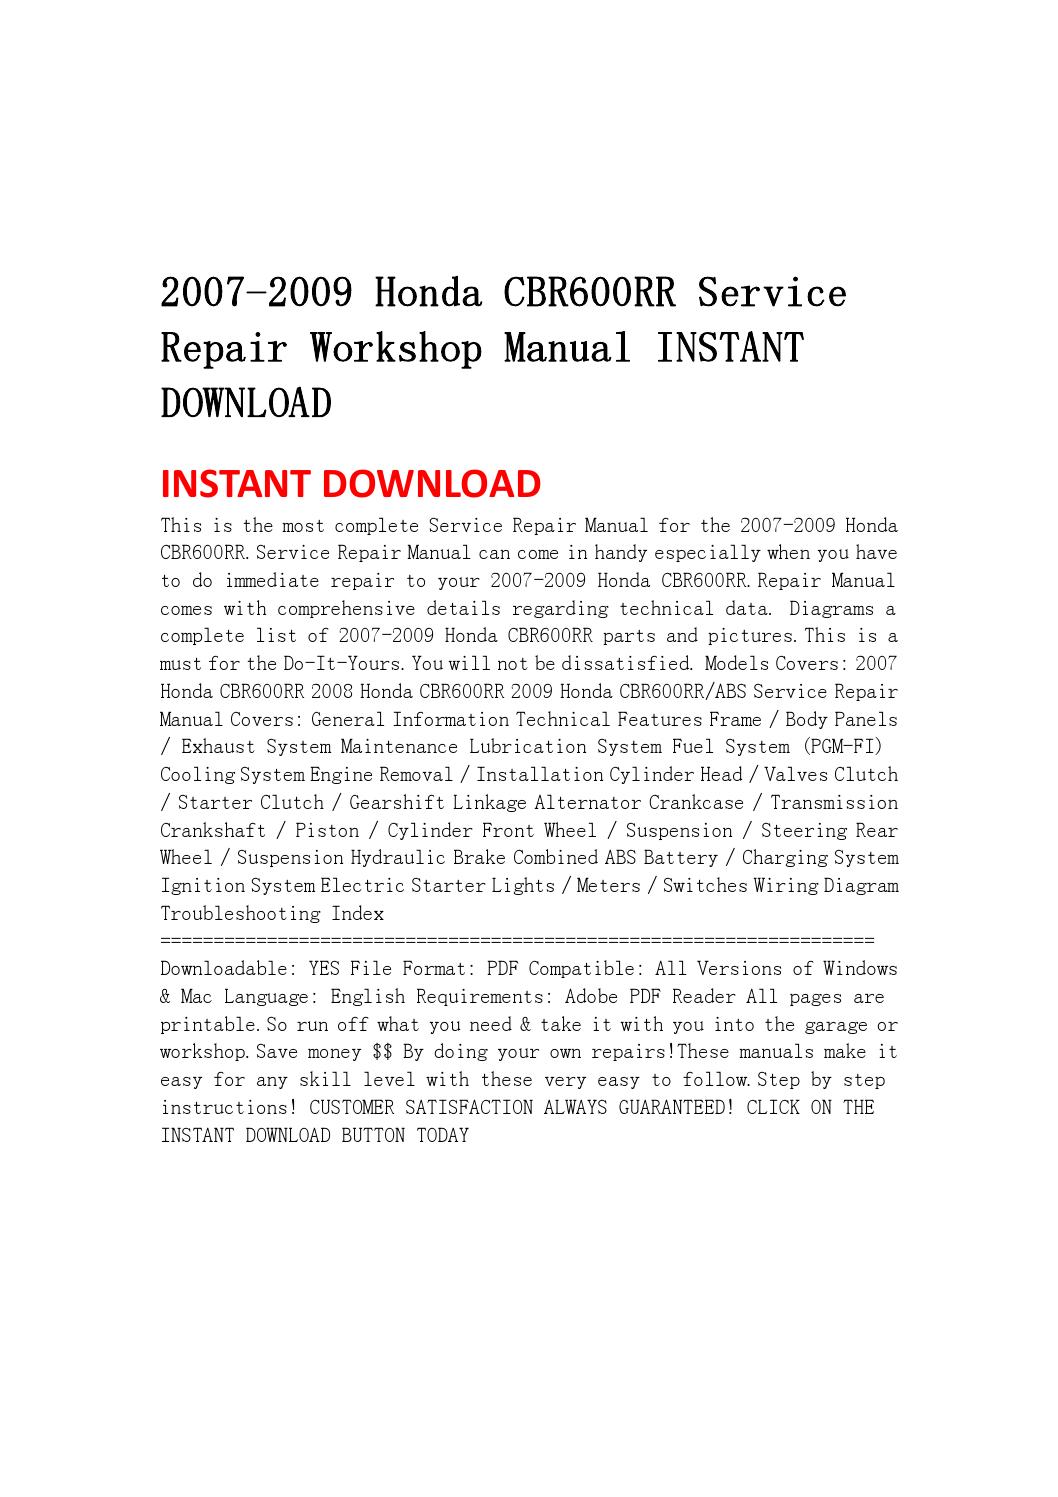 2007 honda cbr600rr service manual